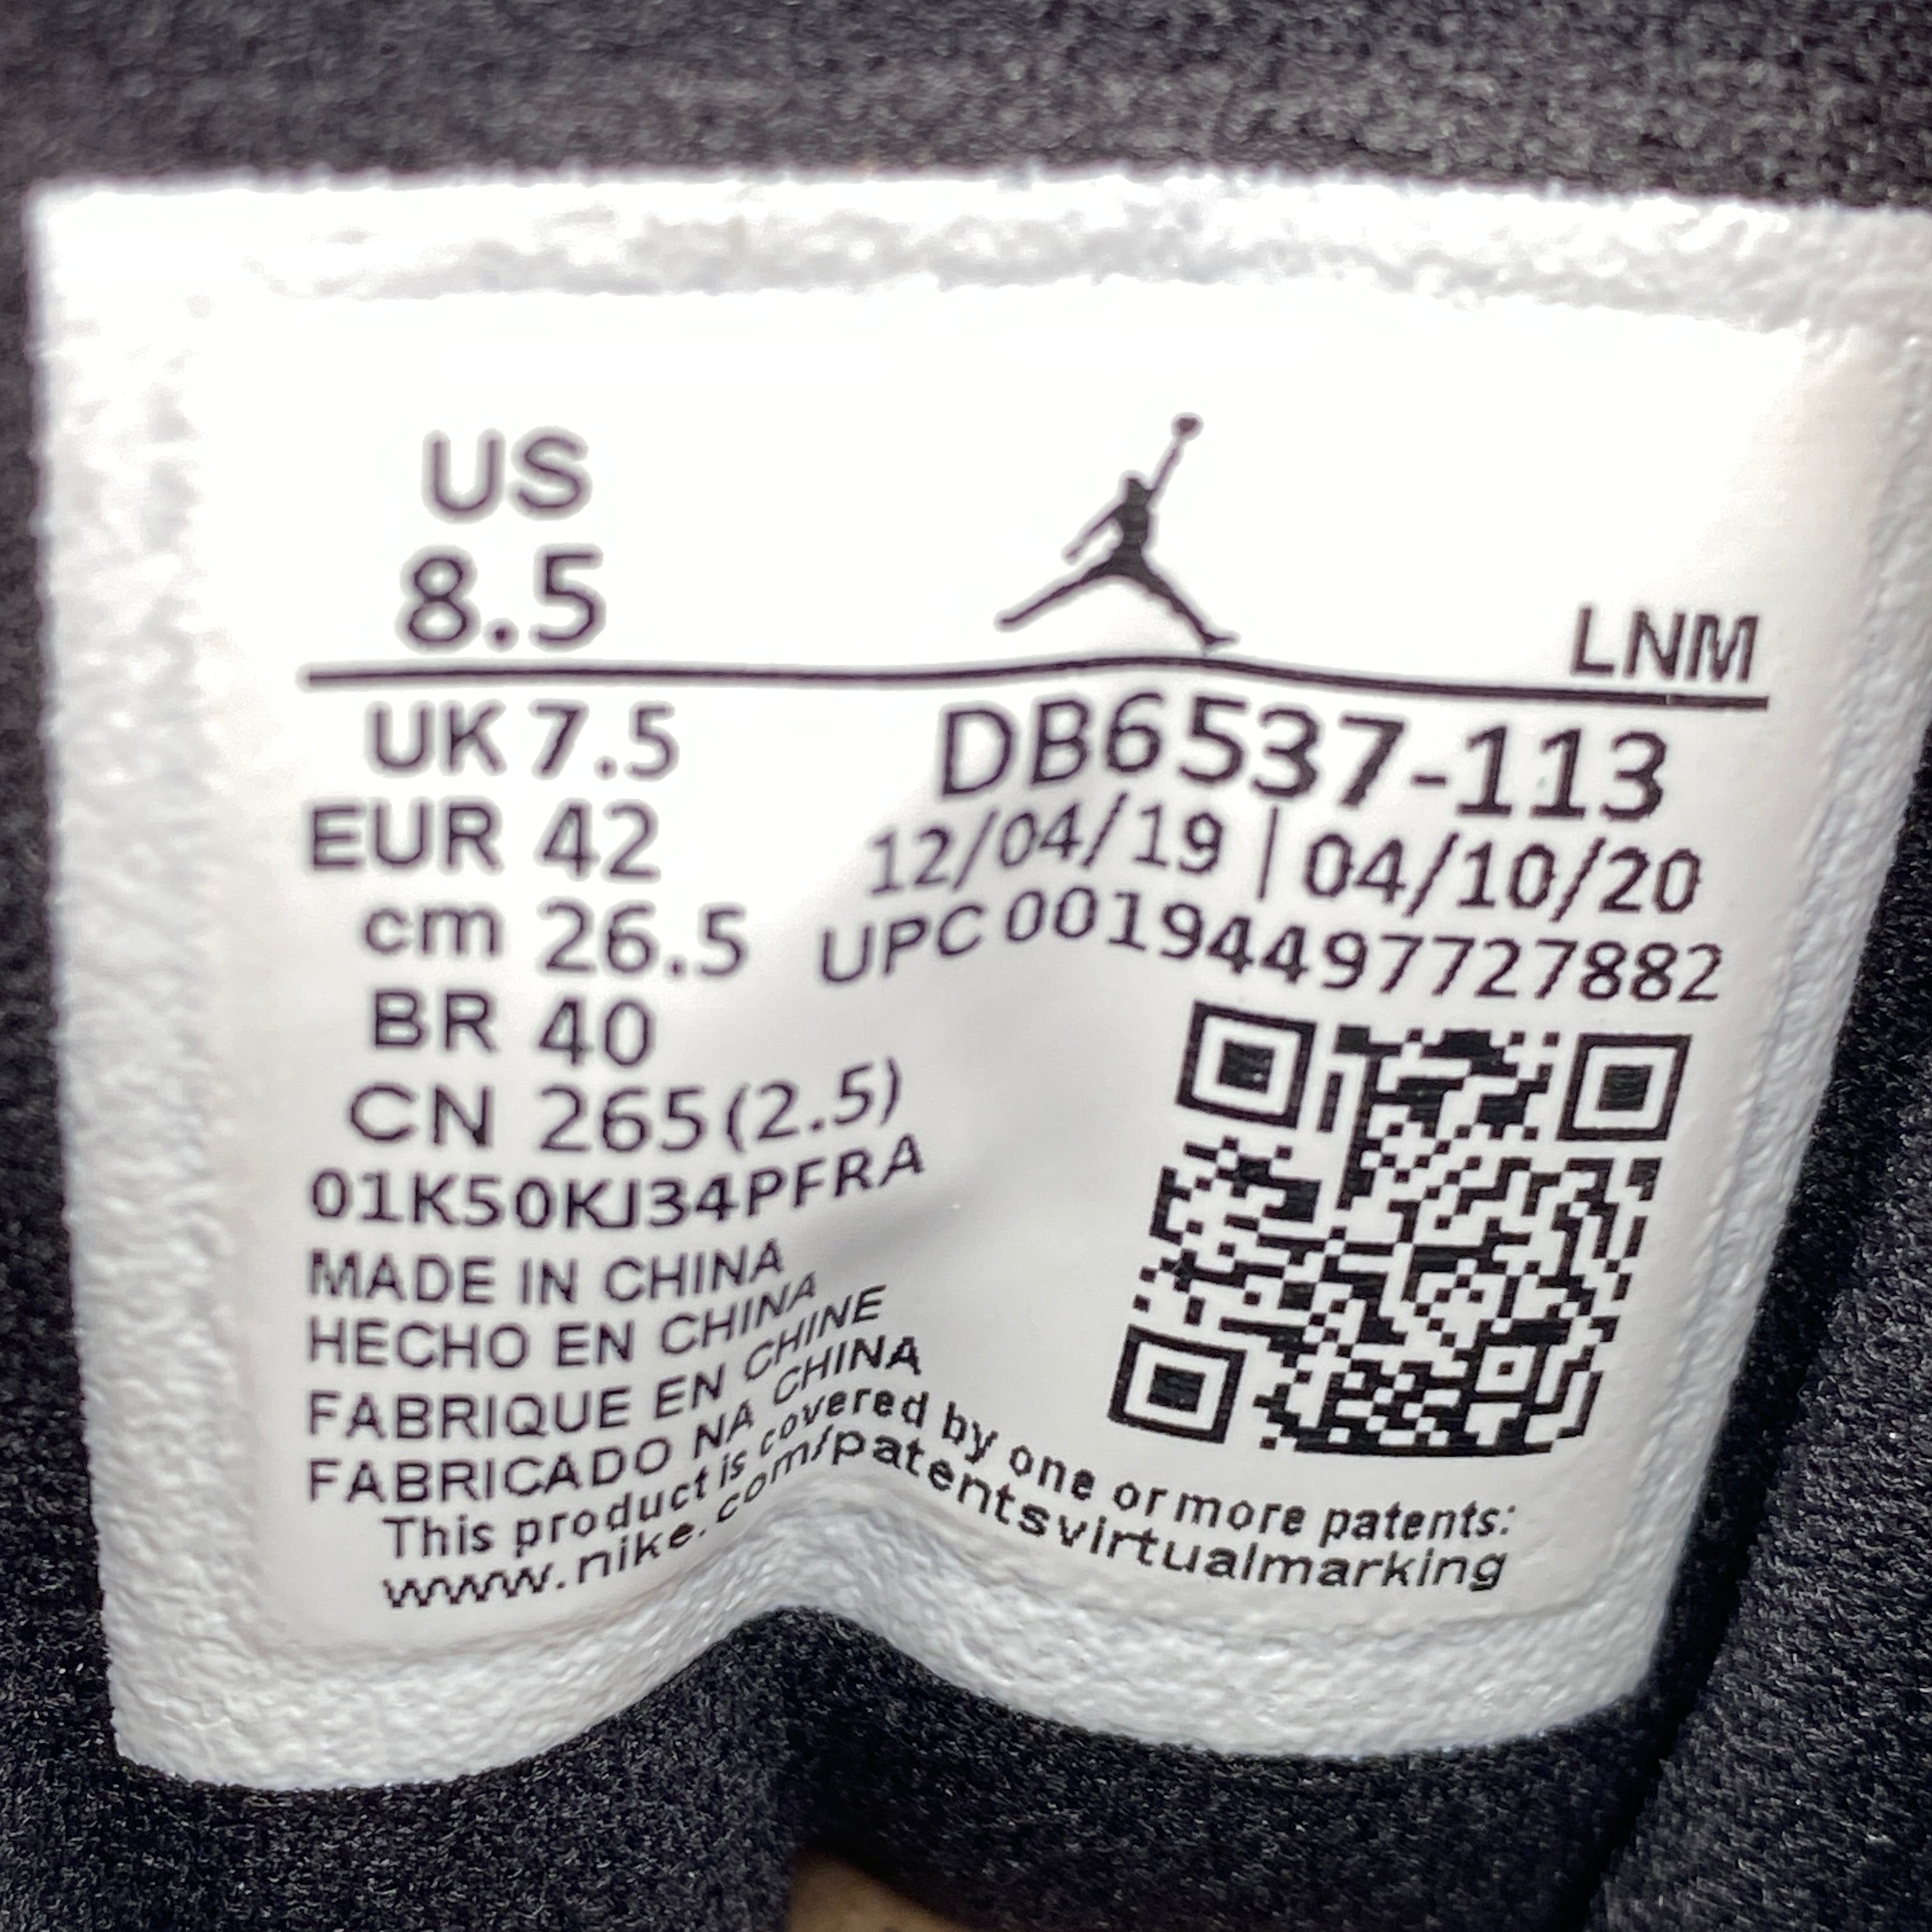 Air Jordan 13 Retro &quot;Lucky Green&quot; 2020 New Size 8.5